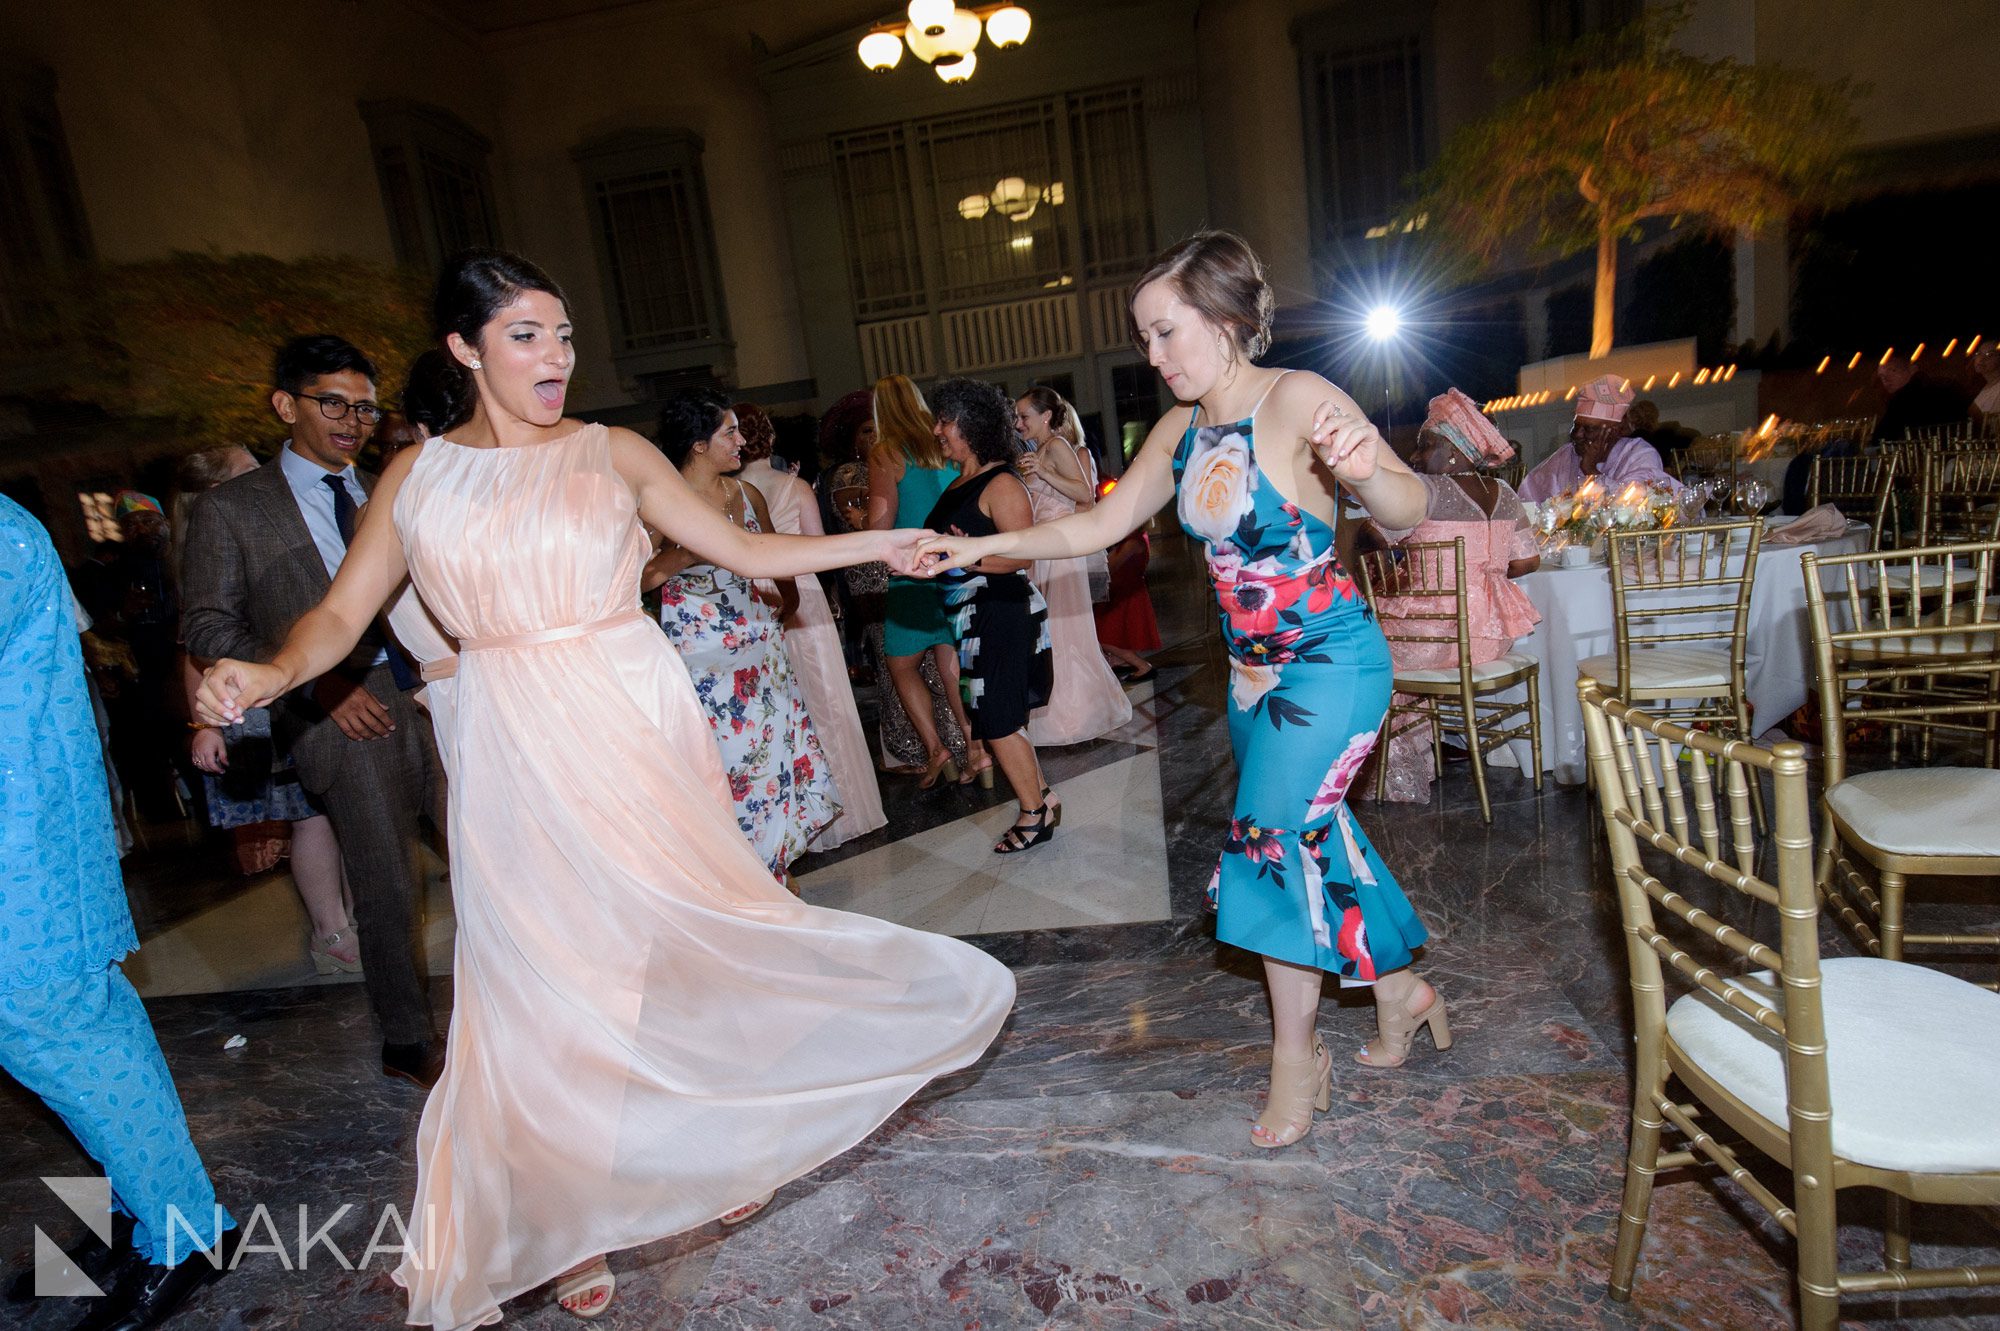 Harold Washington wedding reception dancing photo